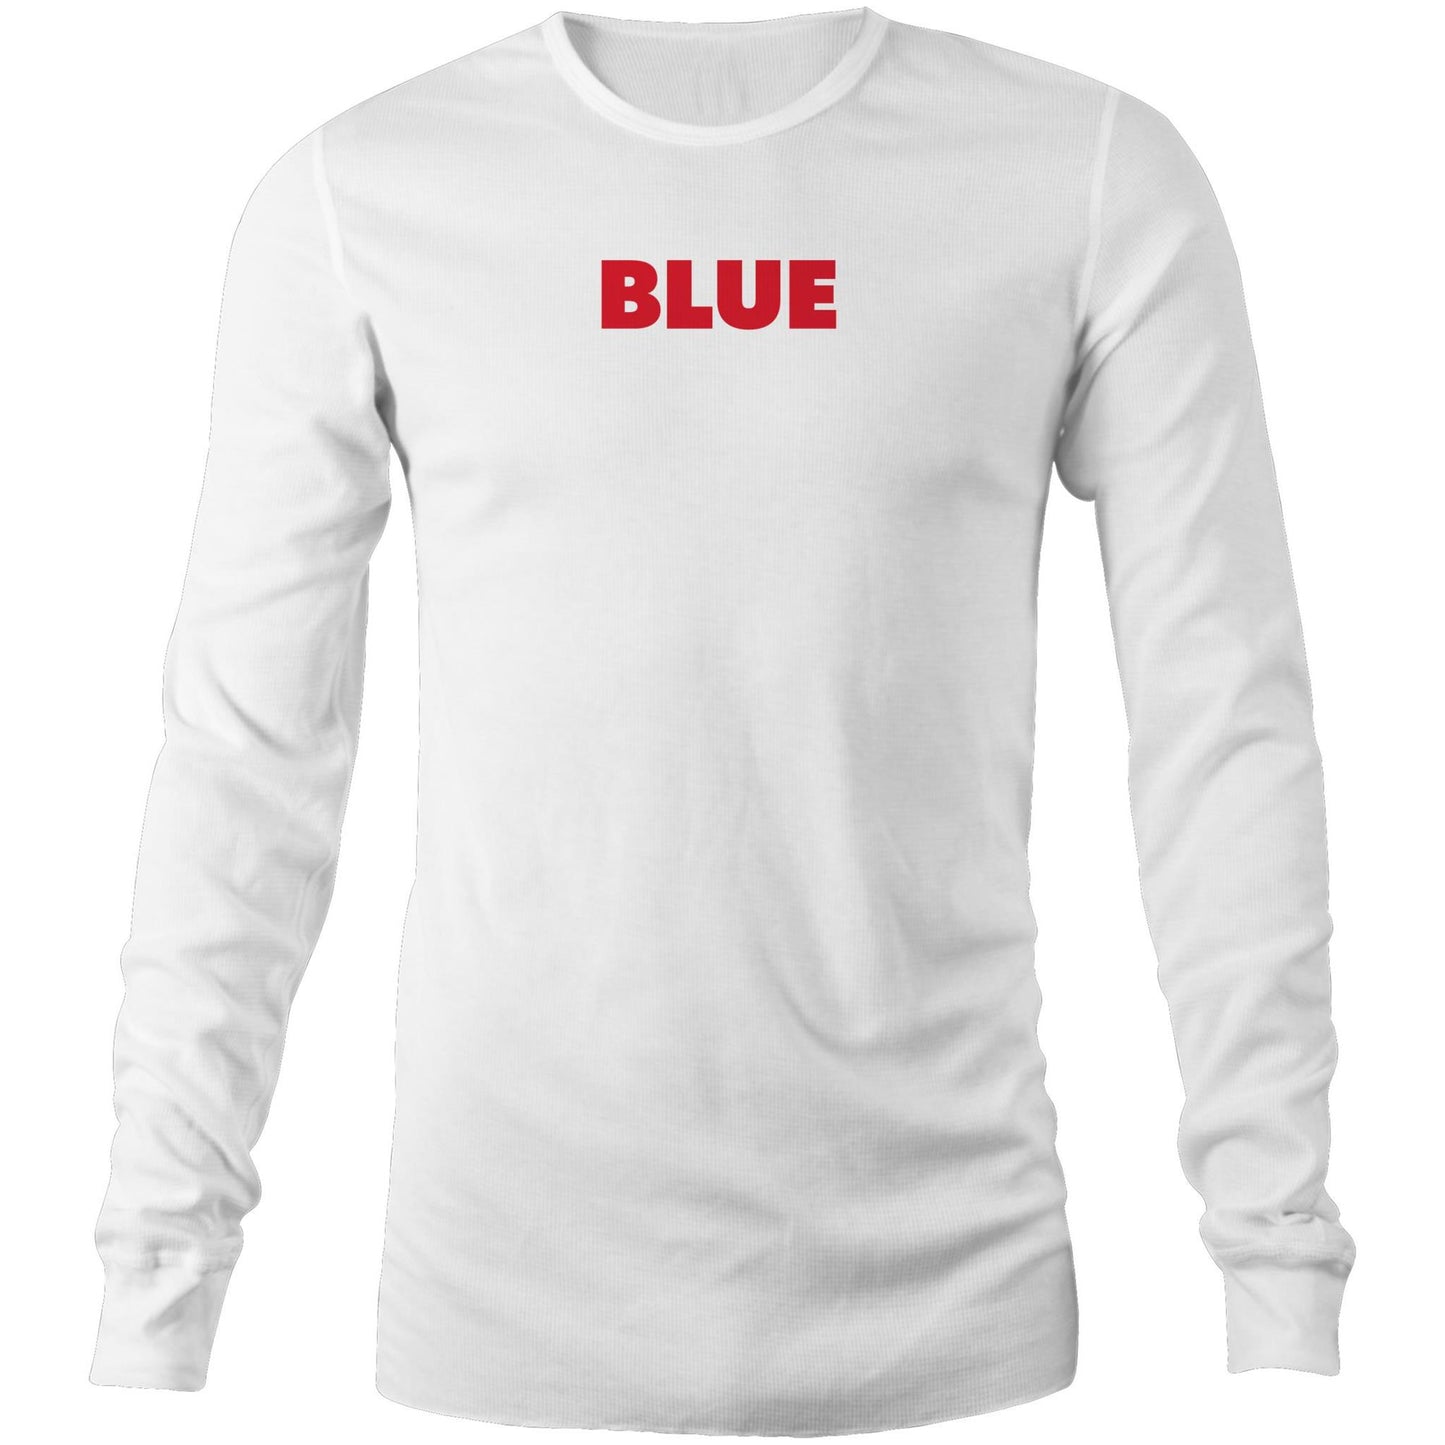 BLUE Long Sleeve T Shirts